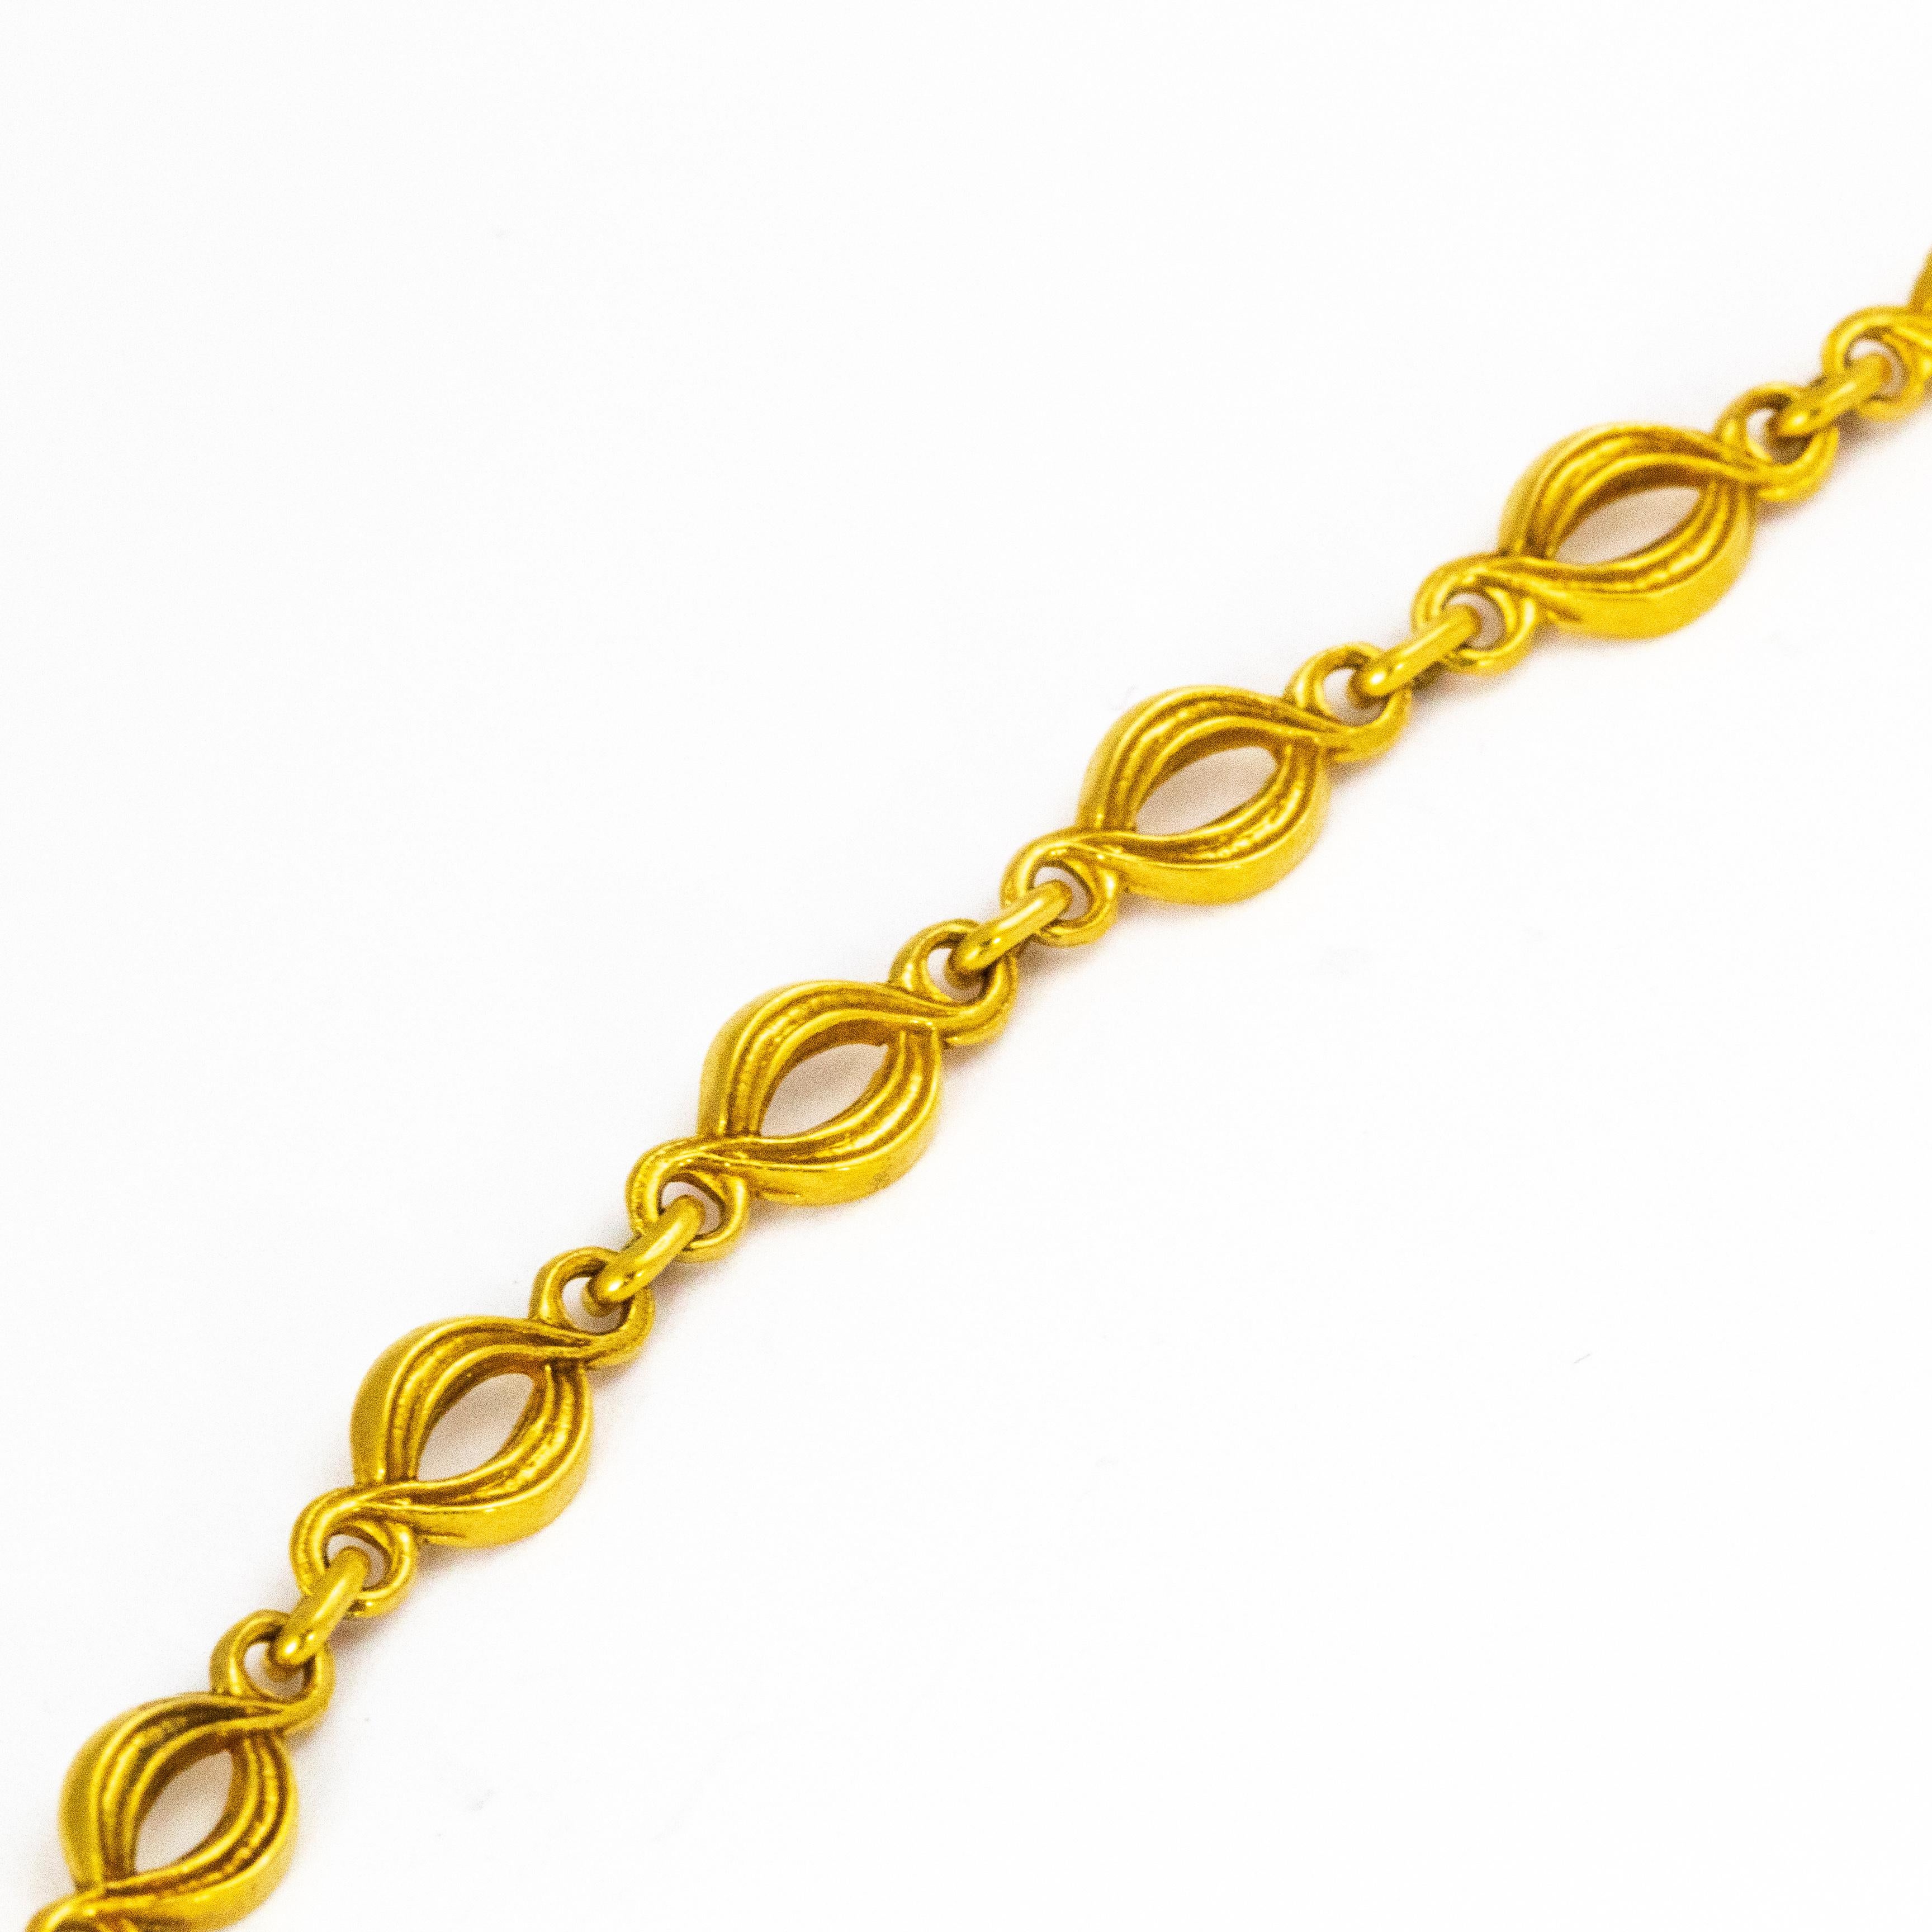 An elegant Edwardian 18 karat yellow gold fancy link chain necklace. 

Length: 50 cm